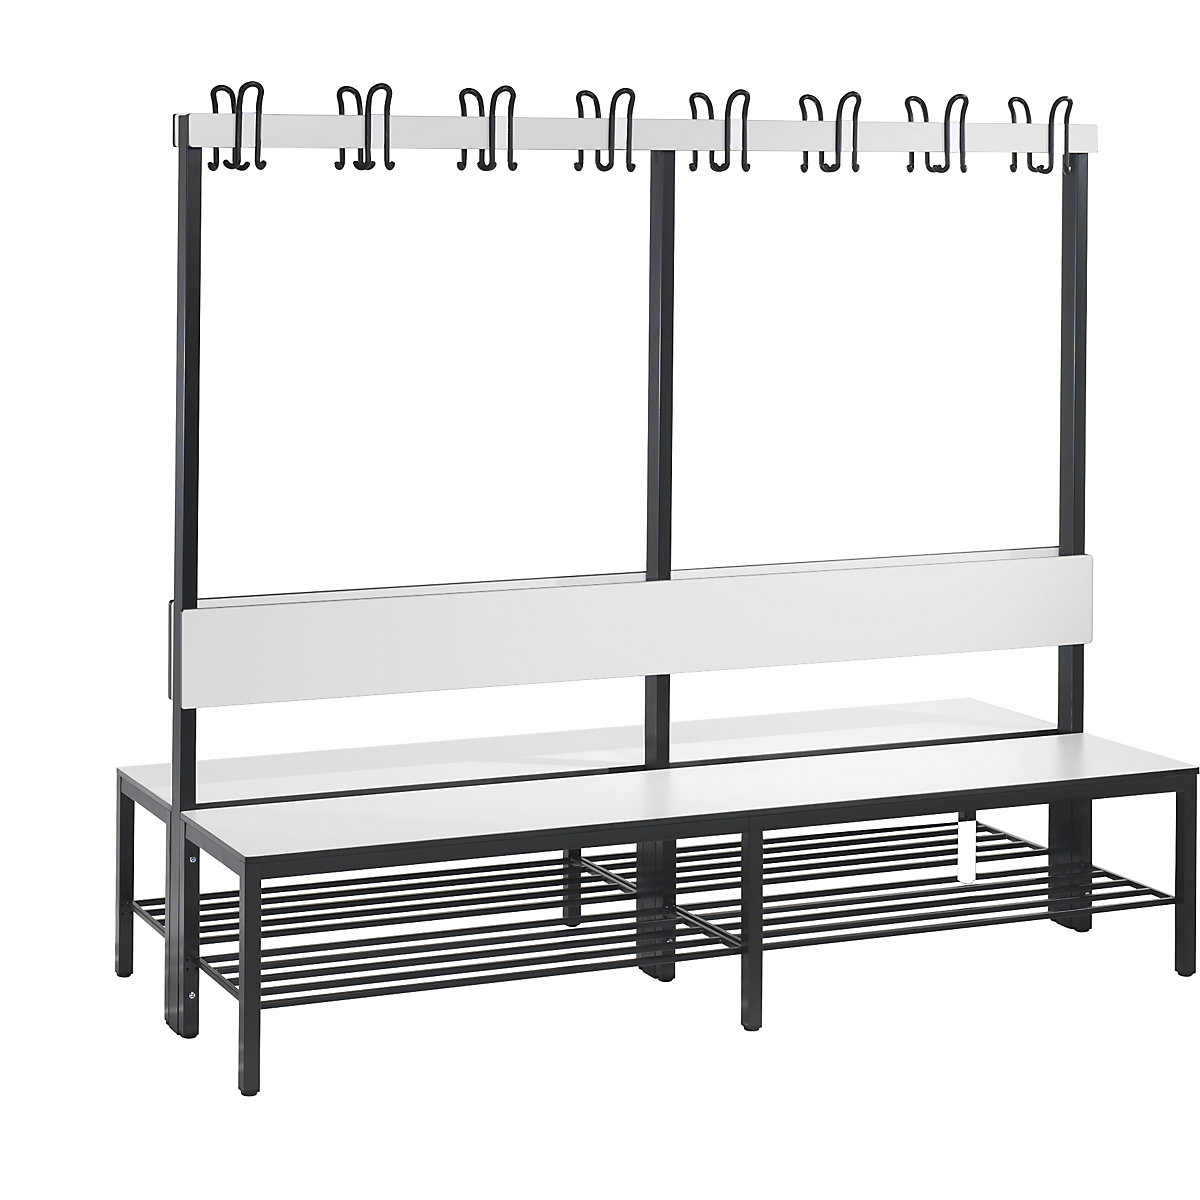 BASIC PLUS cloakroom bench, double sided – C+P, seat HPL, hook rail, shoe rack, length 1960 mm, white-2